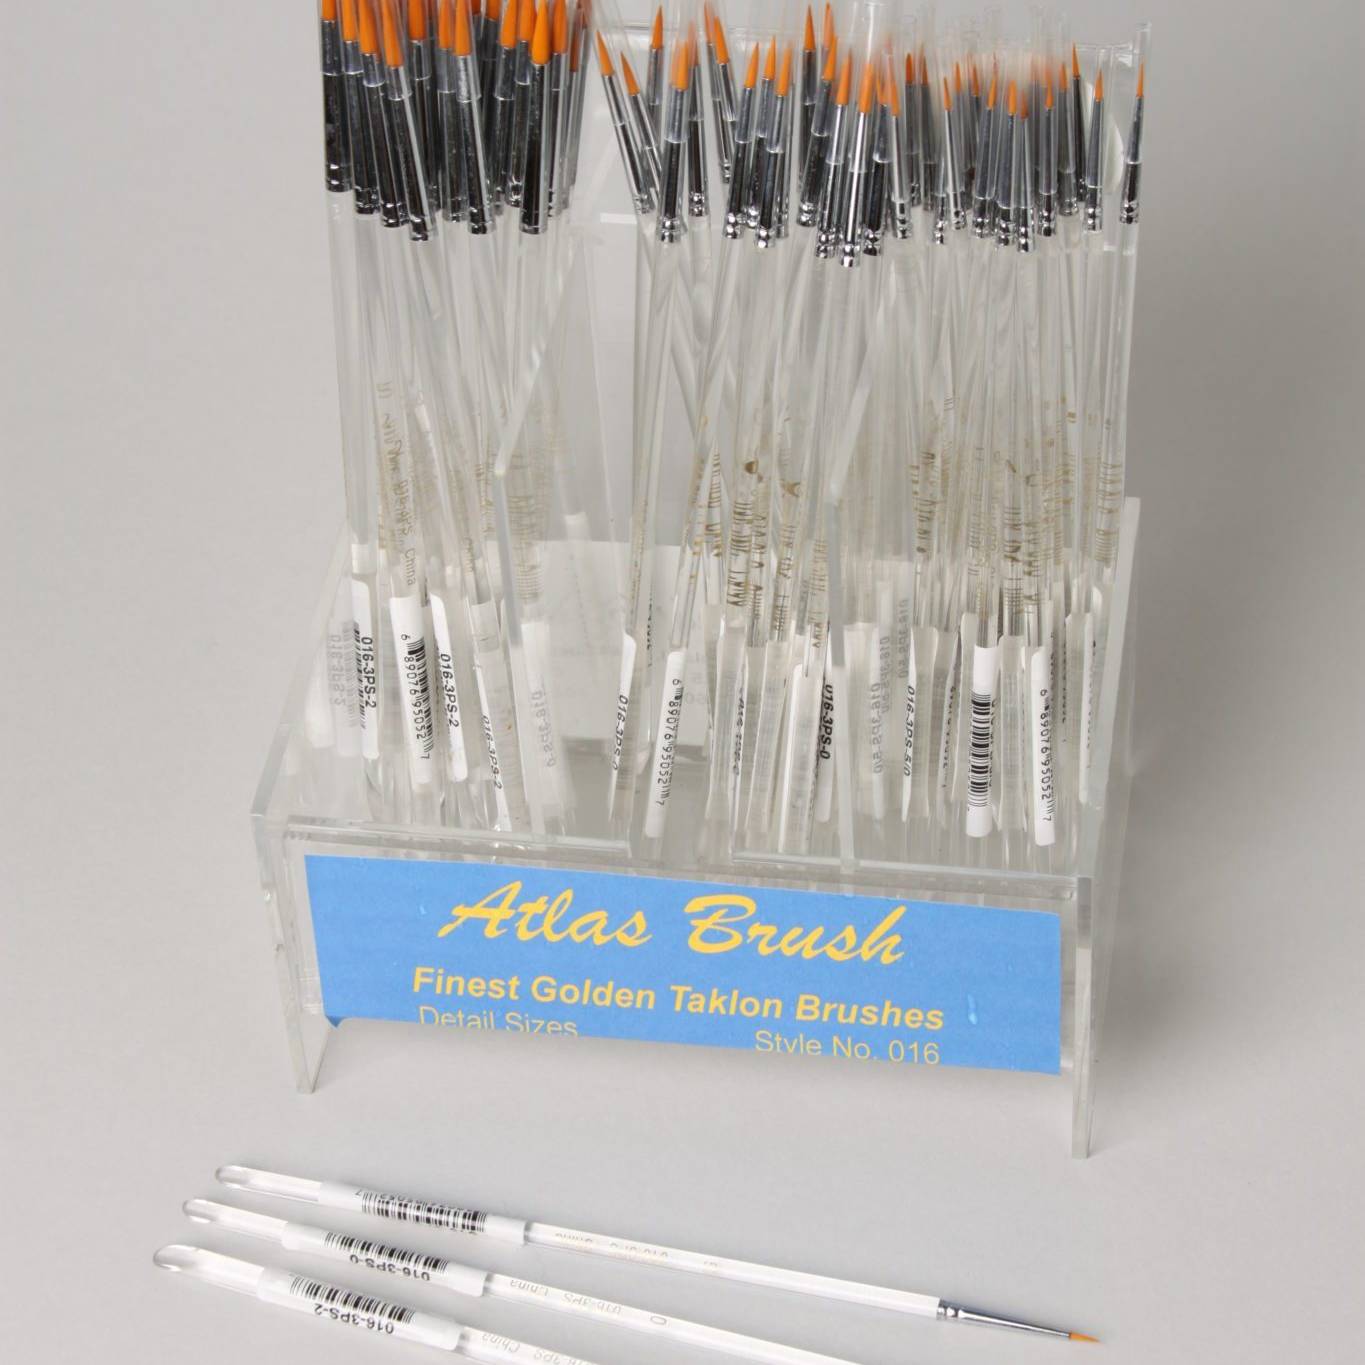 Atlas Brush Camel Hair 5-pc Set Abs1025 for sale online